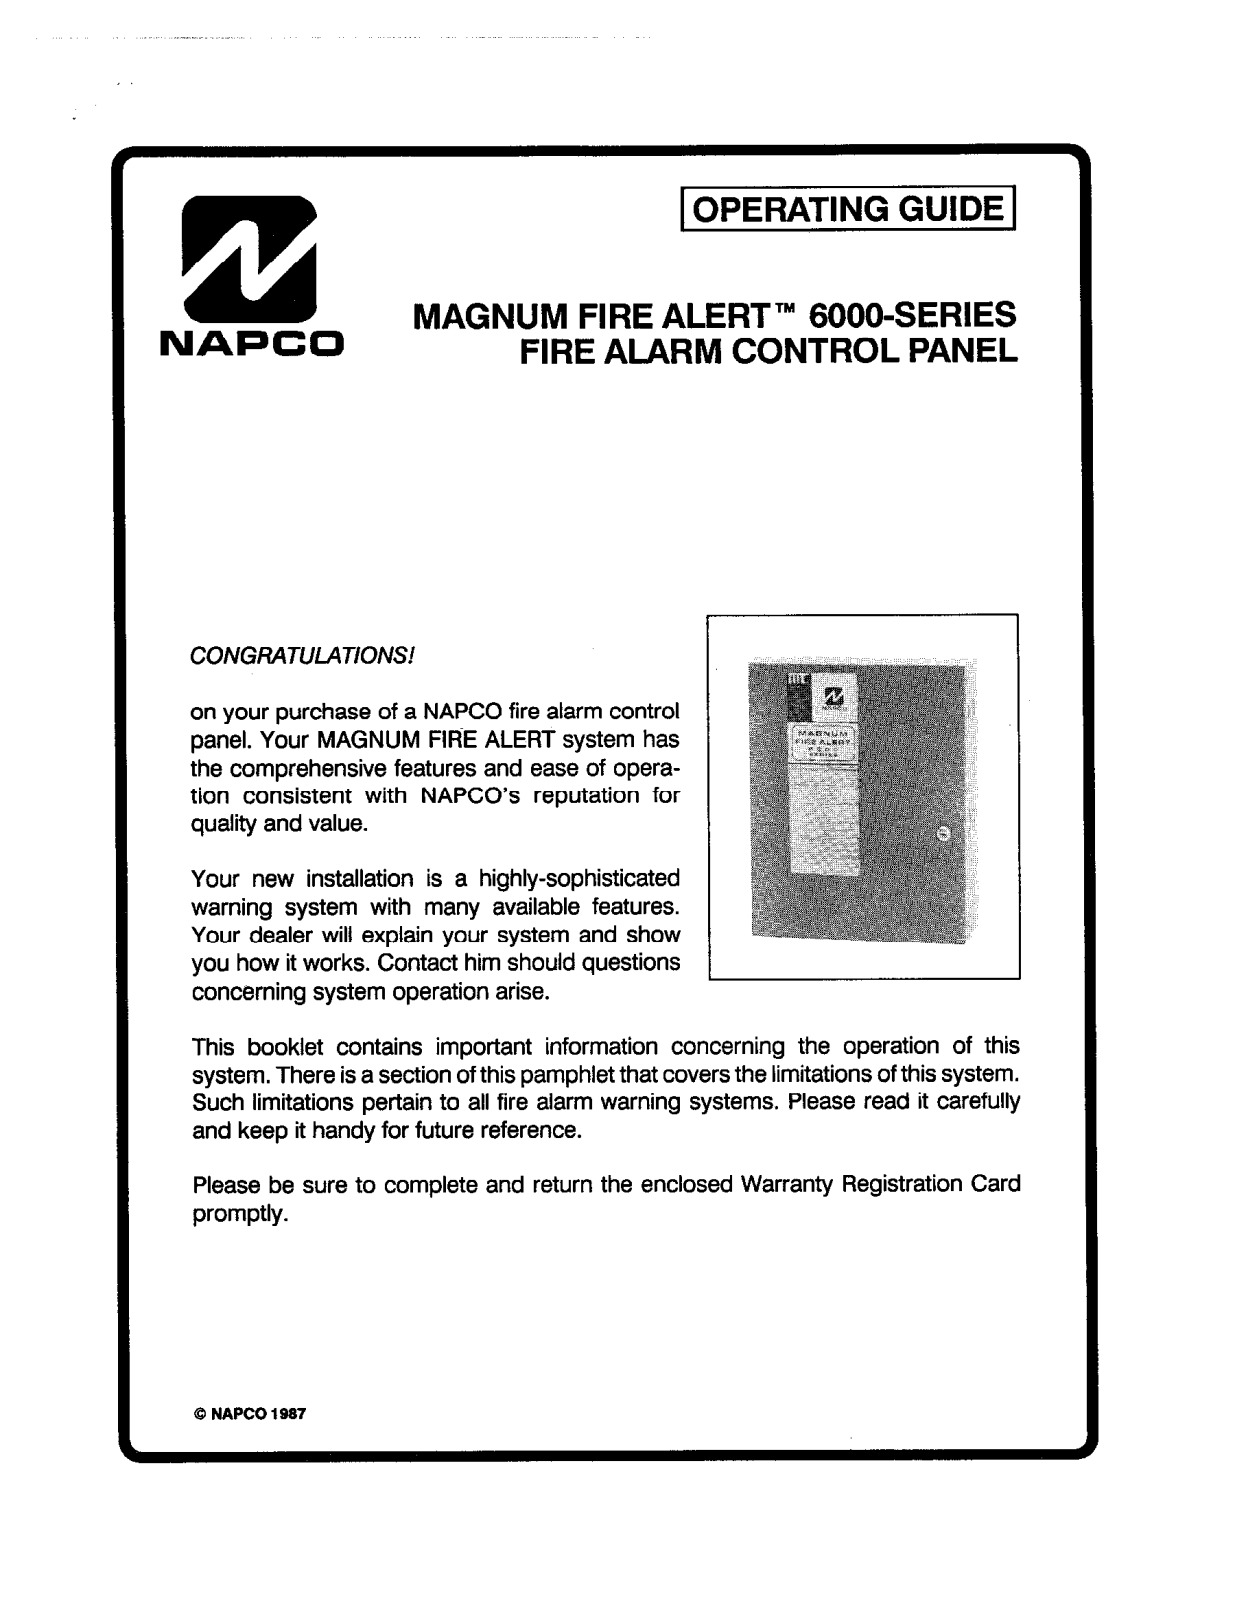 Napco MAGNUM FIRE ALERT 6000 operating Manual